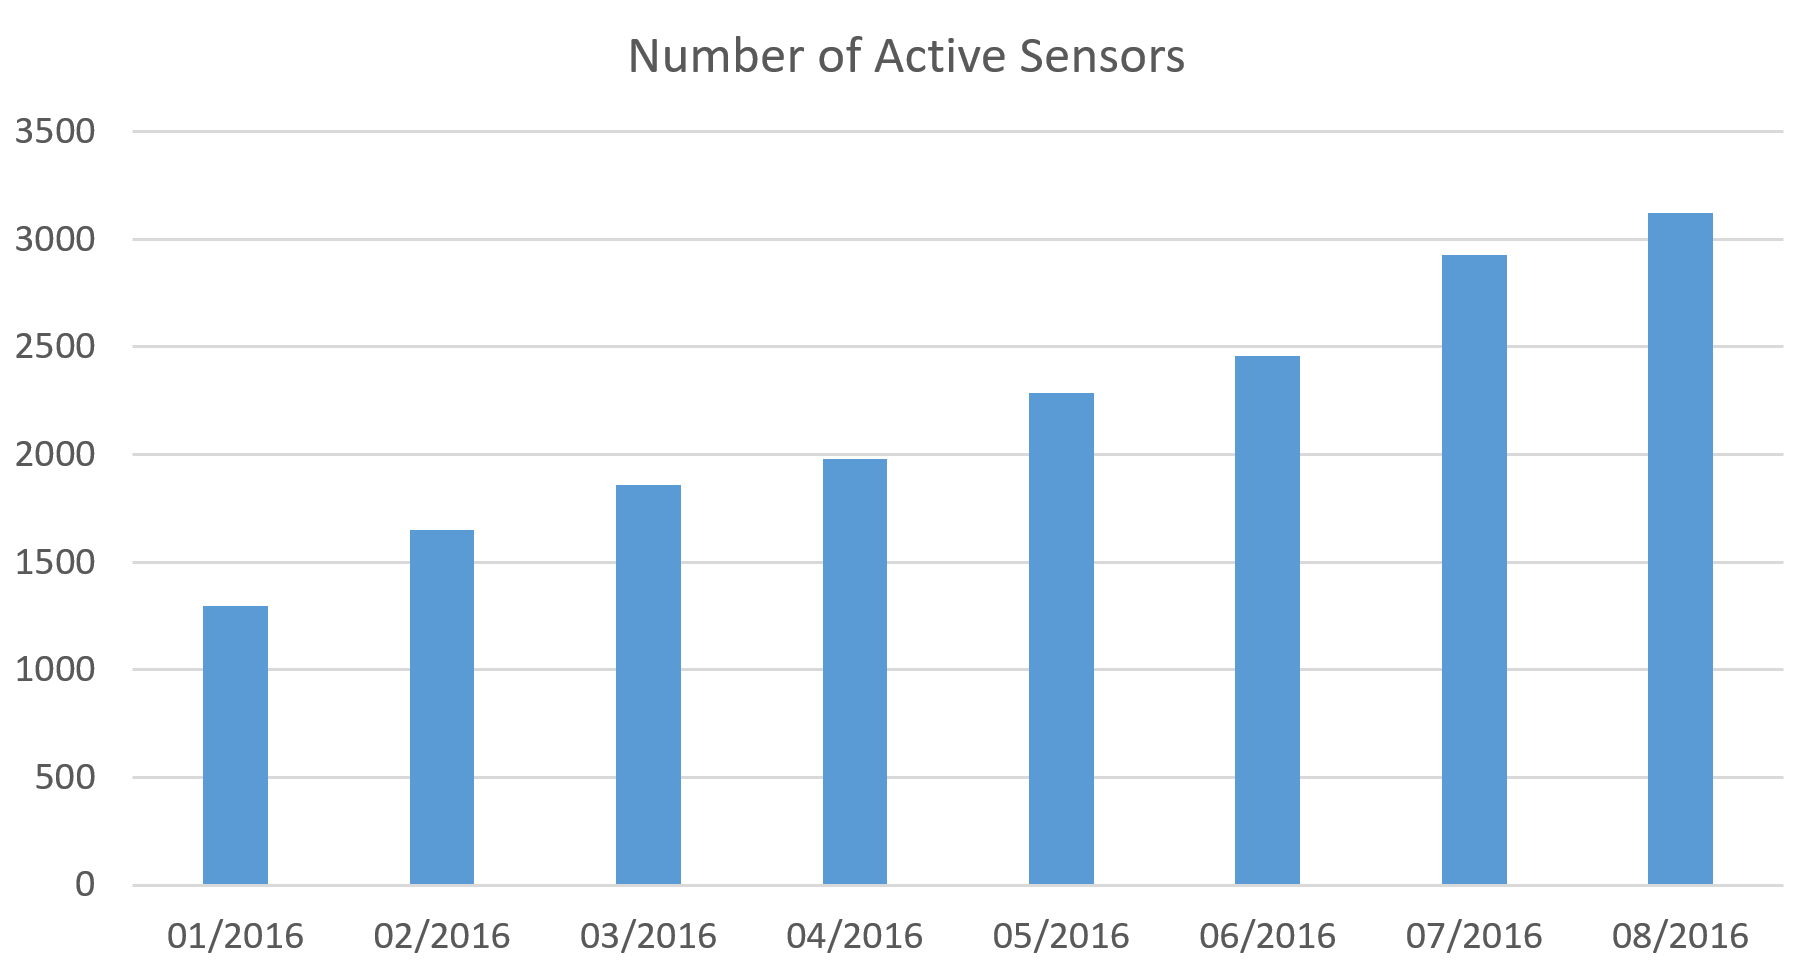 Active ADSB sensors